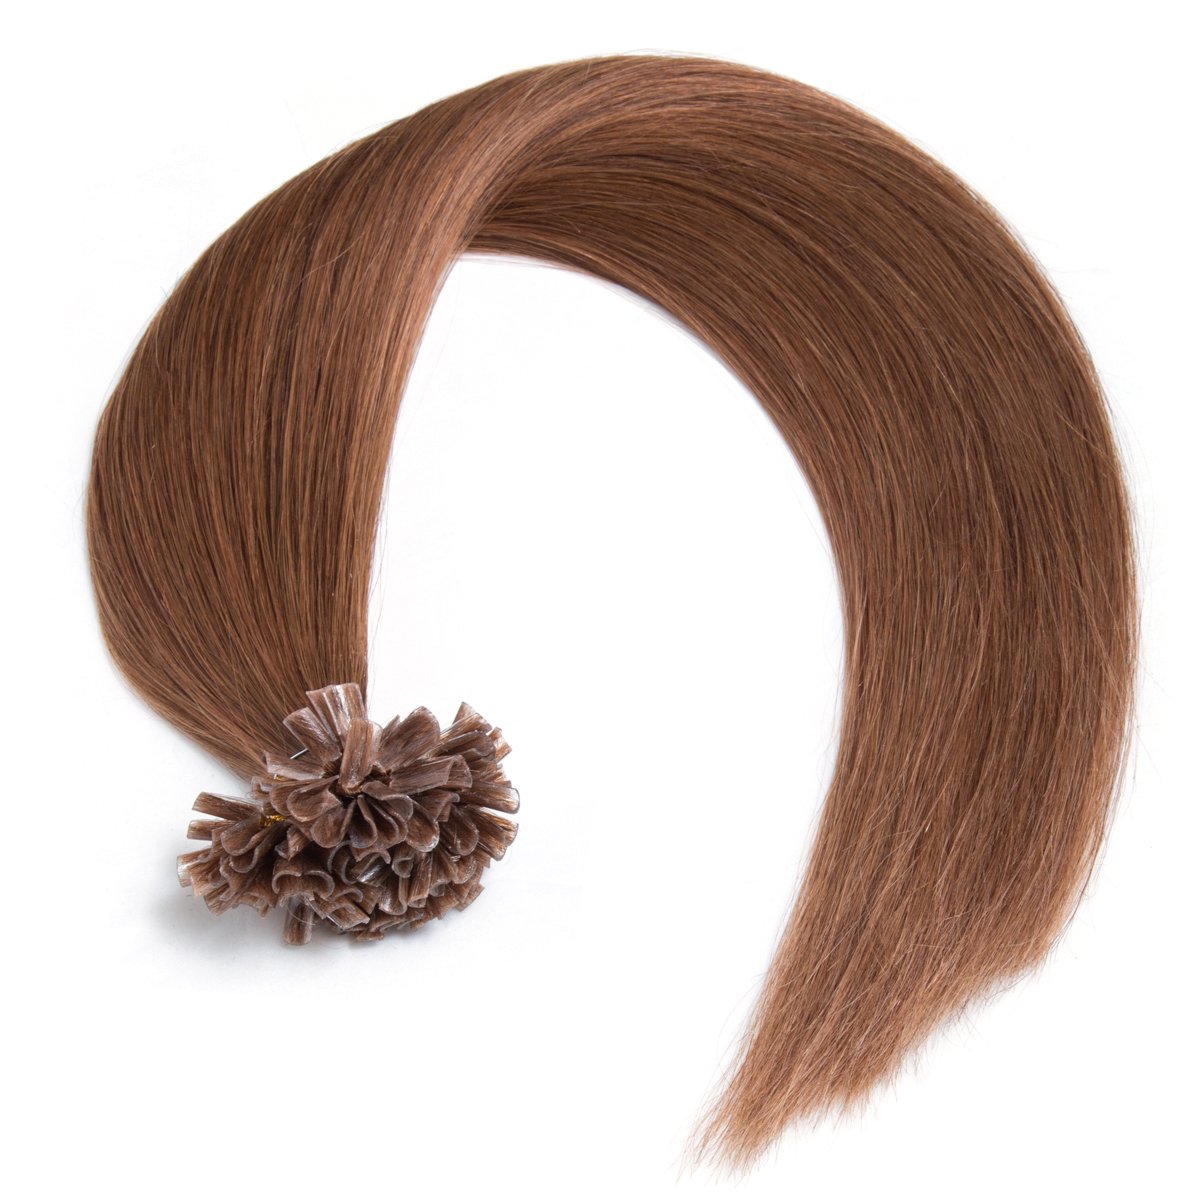 Goldbraune Keratin Bonding Extensions aus 100% Remy Echthaar/Human Hair - 100 x 0,5g 50cm Glatte Strähnen - U-Tip als Haarverlängerung und Haarverdichtung - Farbe: #8 Goldbraun